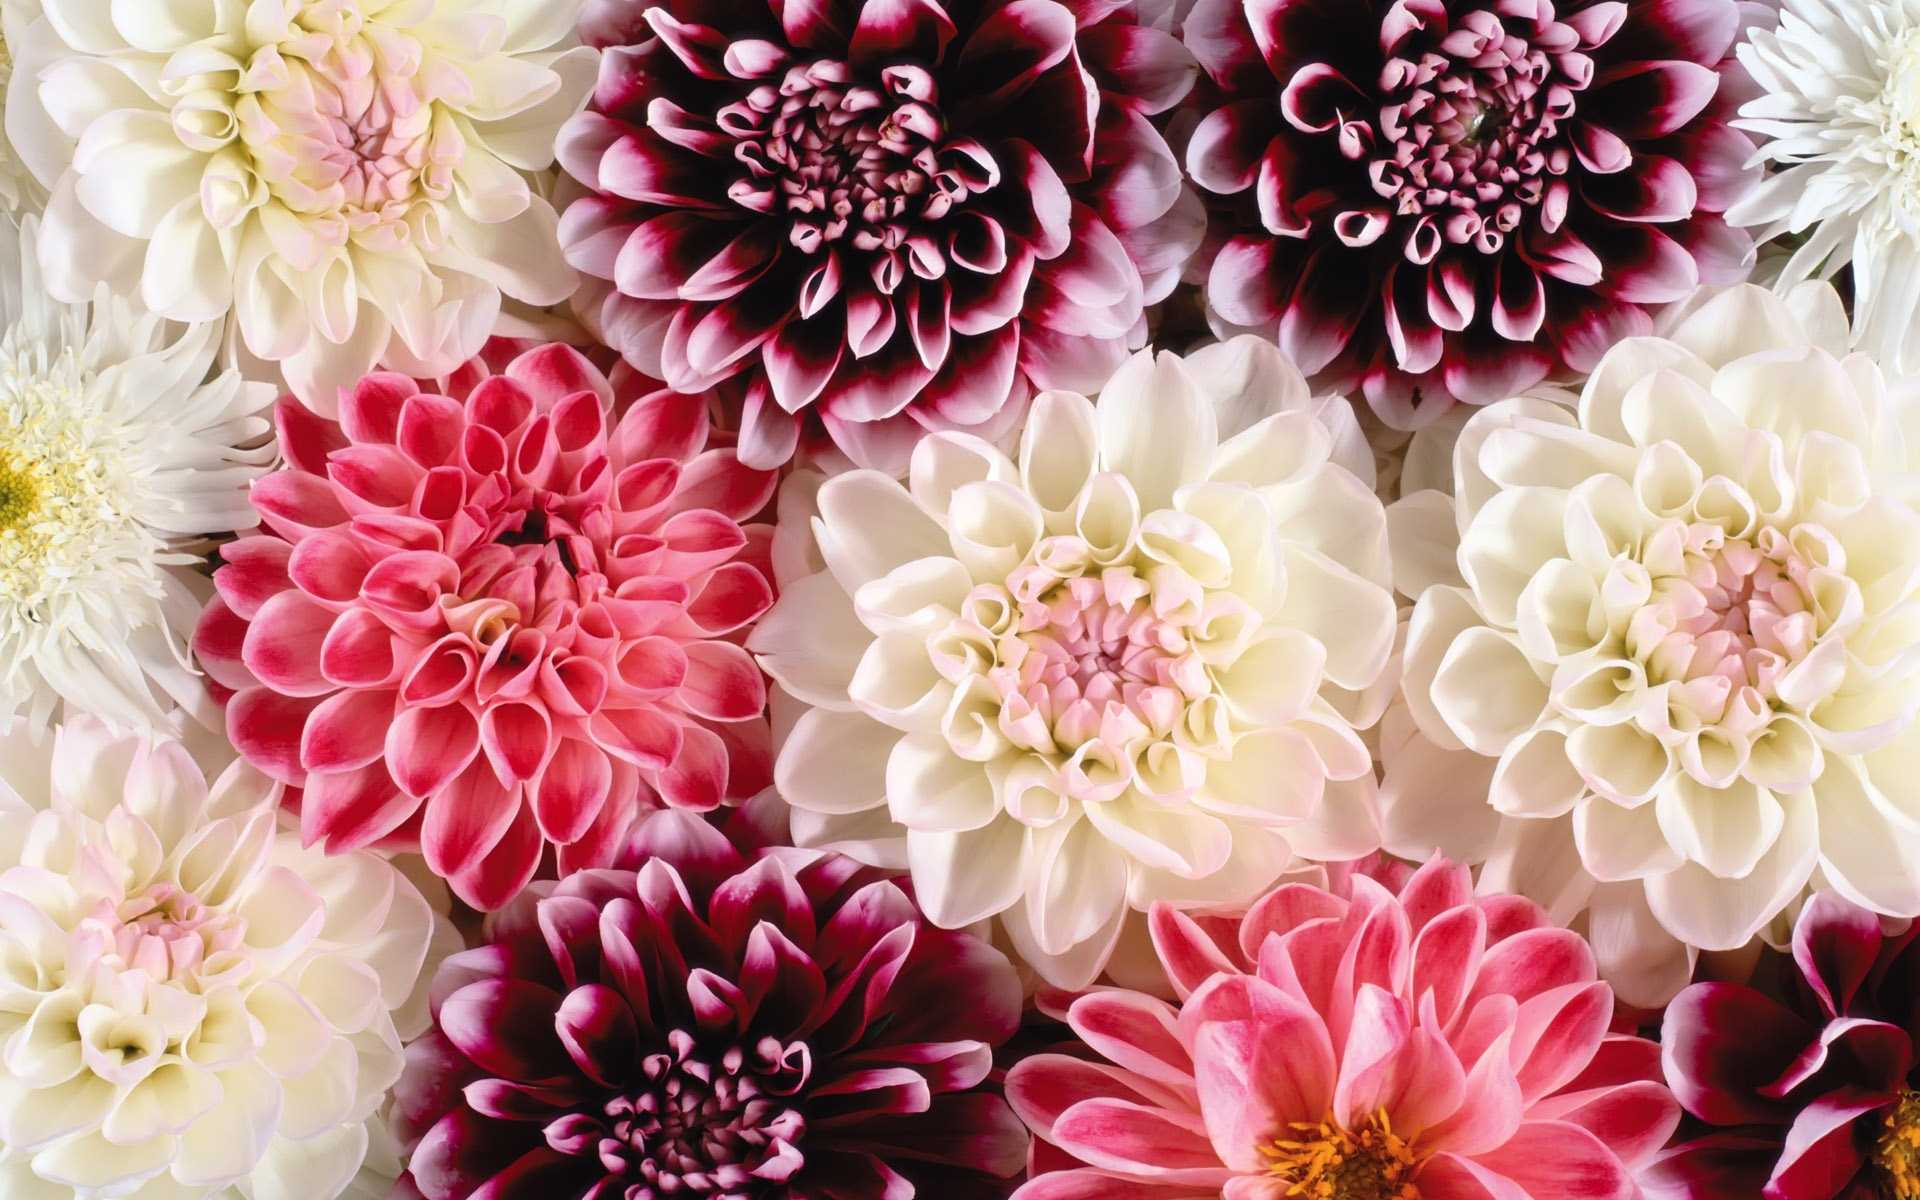 flower images wallpapers download,flower,petal,pink,dahlia,chrysanths